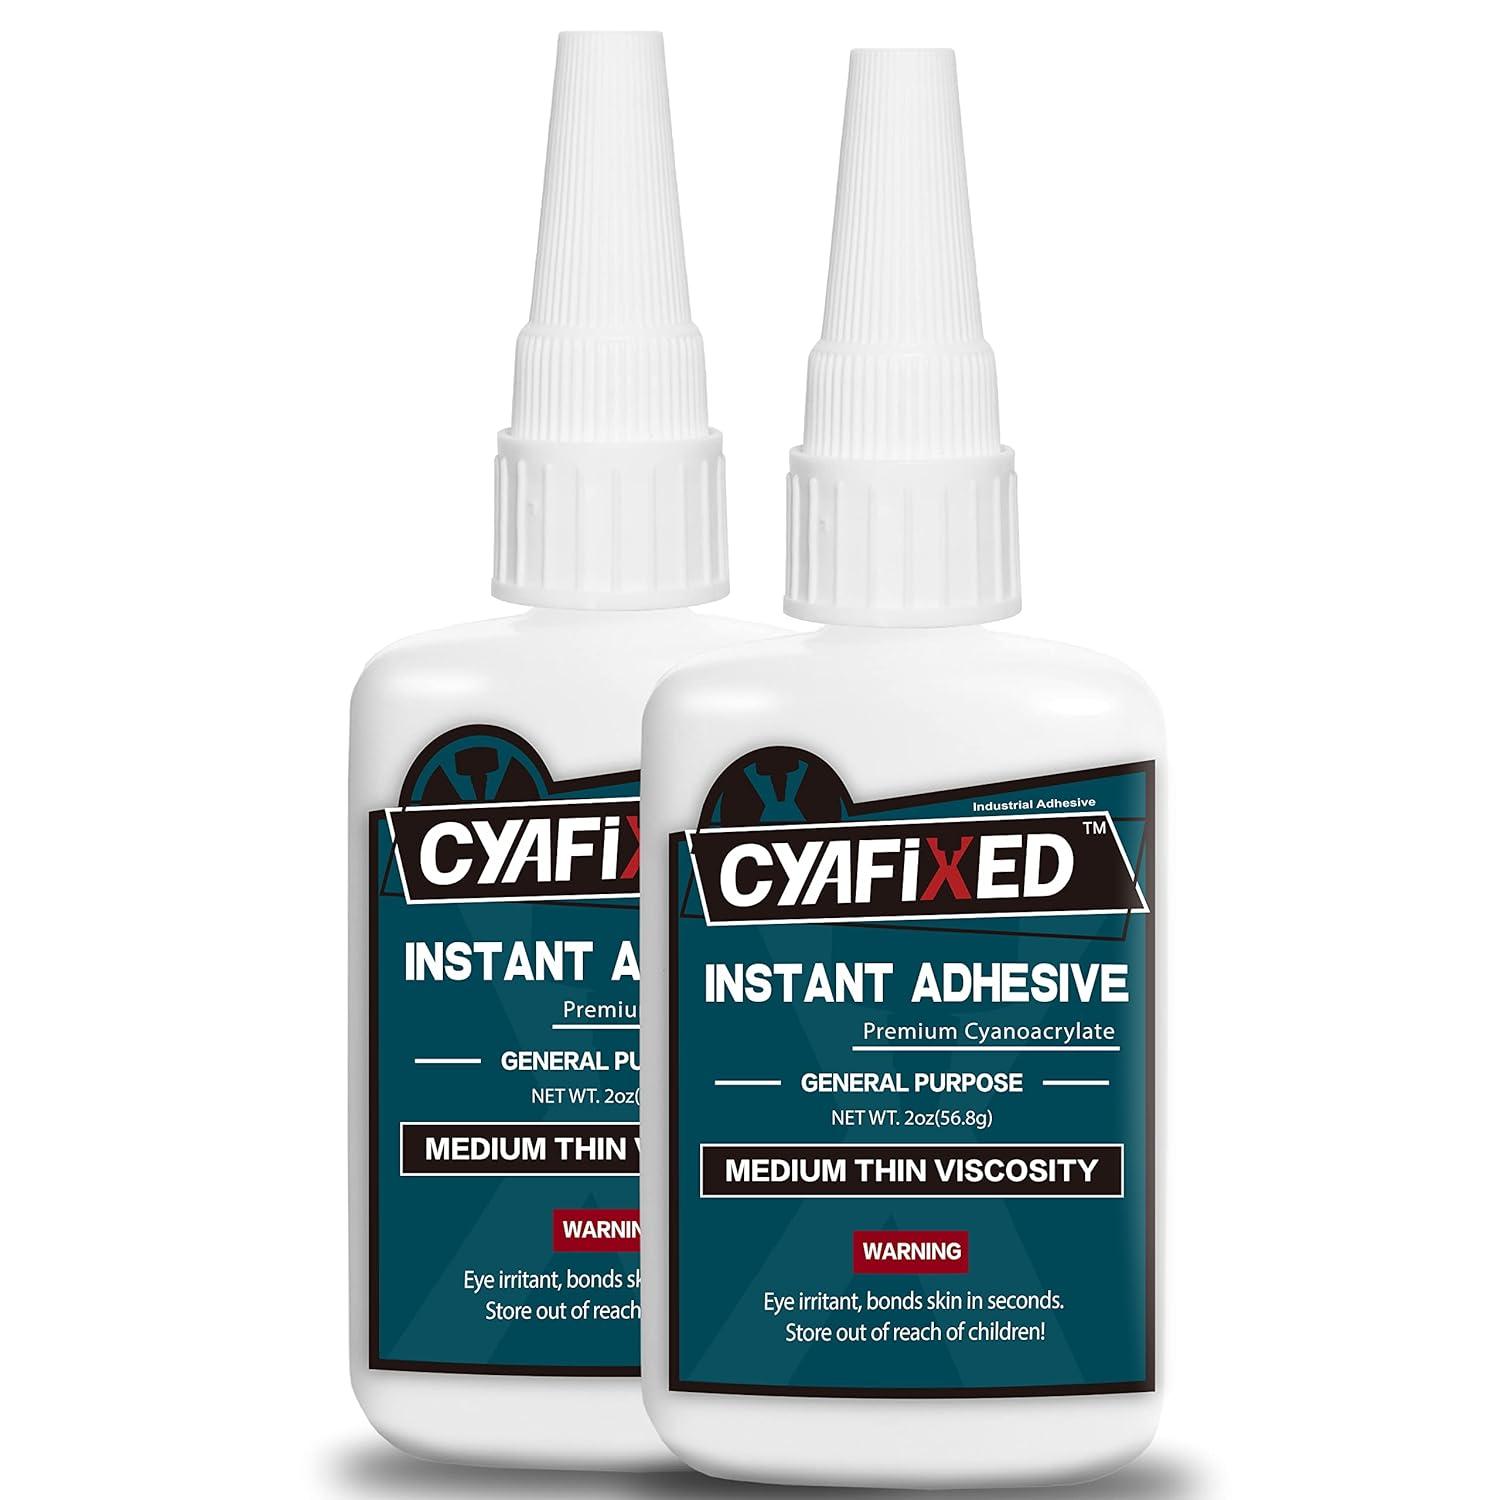 cyafixed super glue cyanoacrylate ca adhesive all-purpose medium-thin viscosity instant adhesive 113 6 grams/